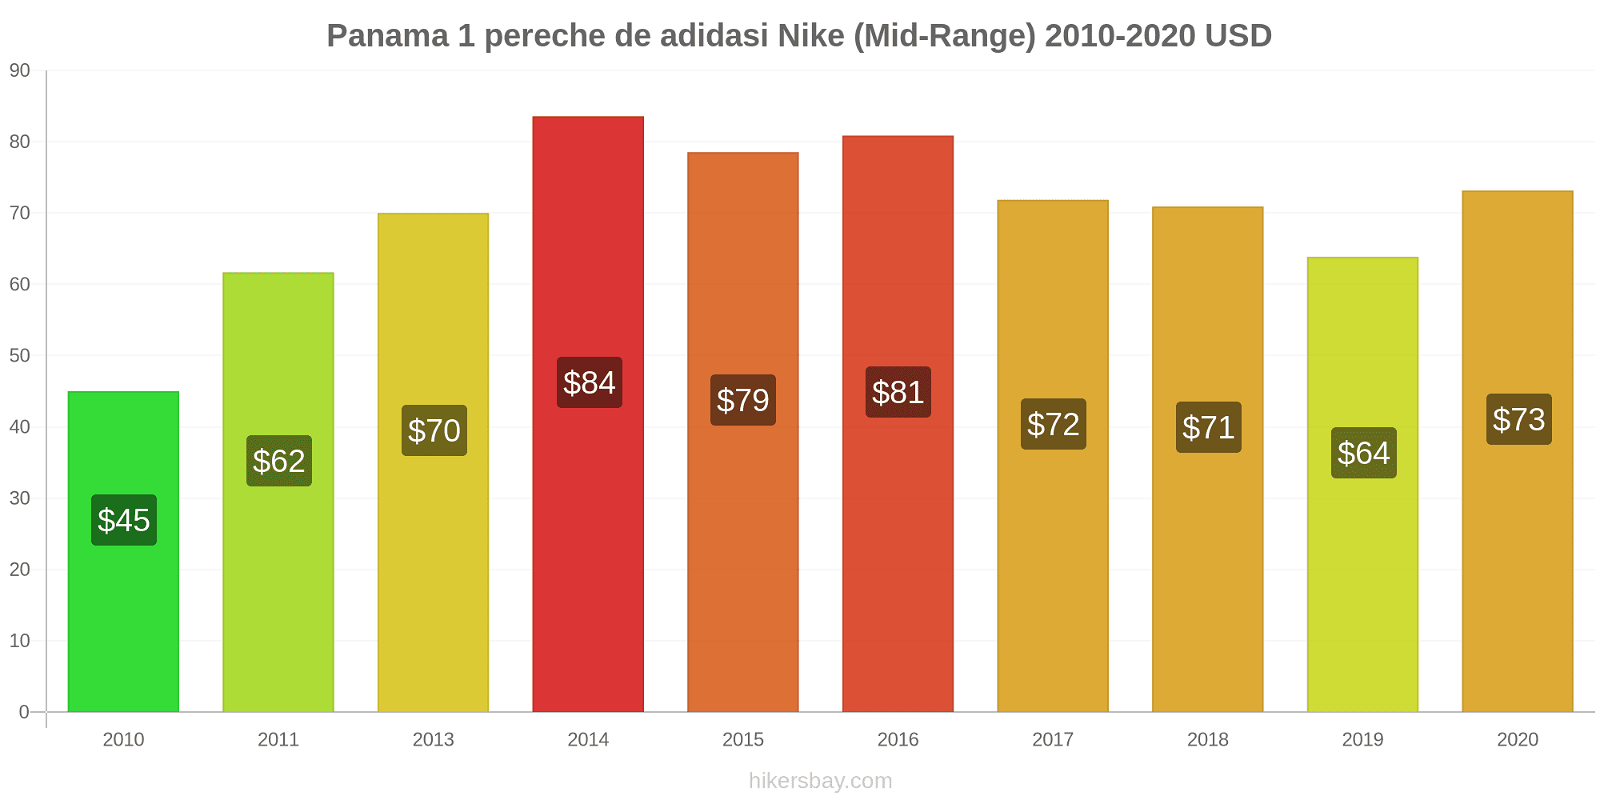 Panama modificări de preț 1 pereche de adidasi Nike (Mid-Range) hikersbay.com